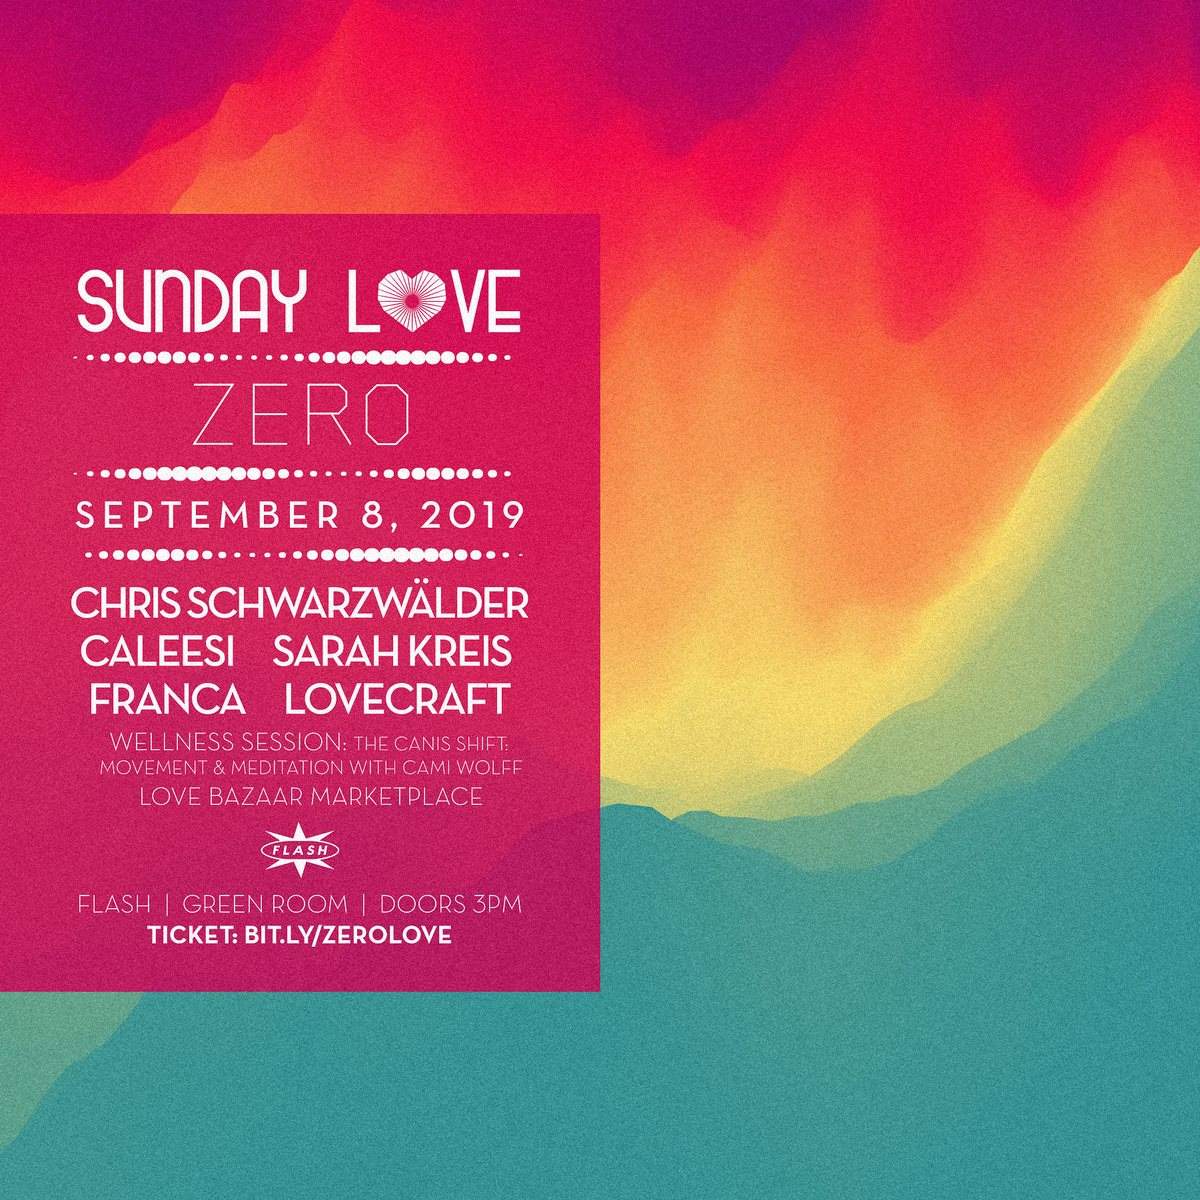 Sunday Love x Zero: Chris Schwarzwalder - Caleesi - Sarah Kreis - Franca - Lovecraft - Página frontal